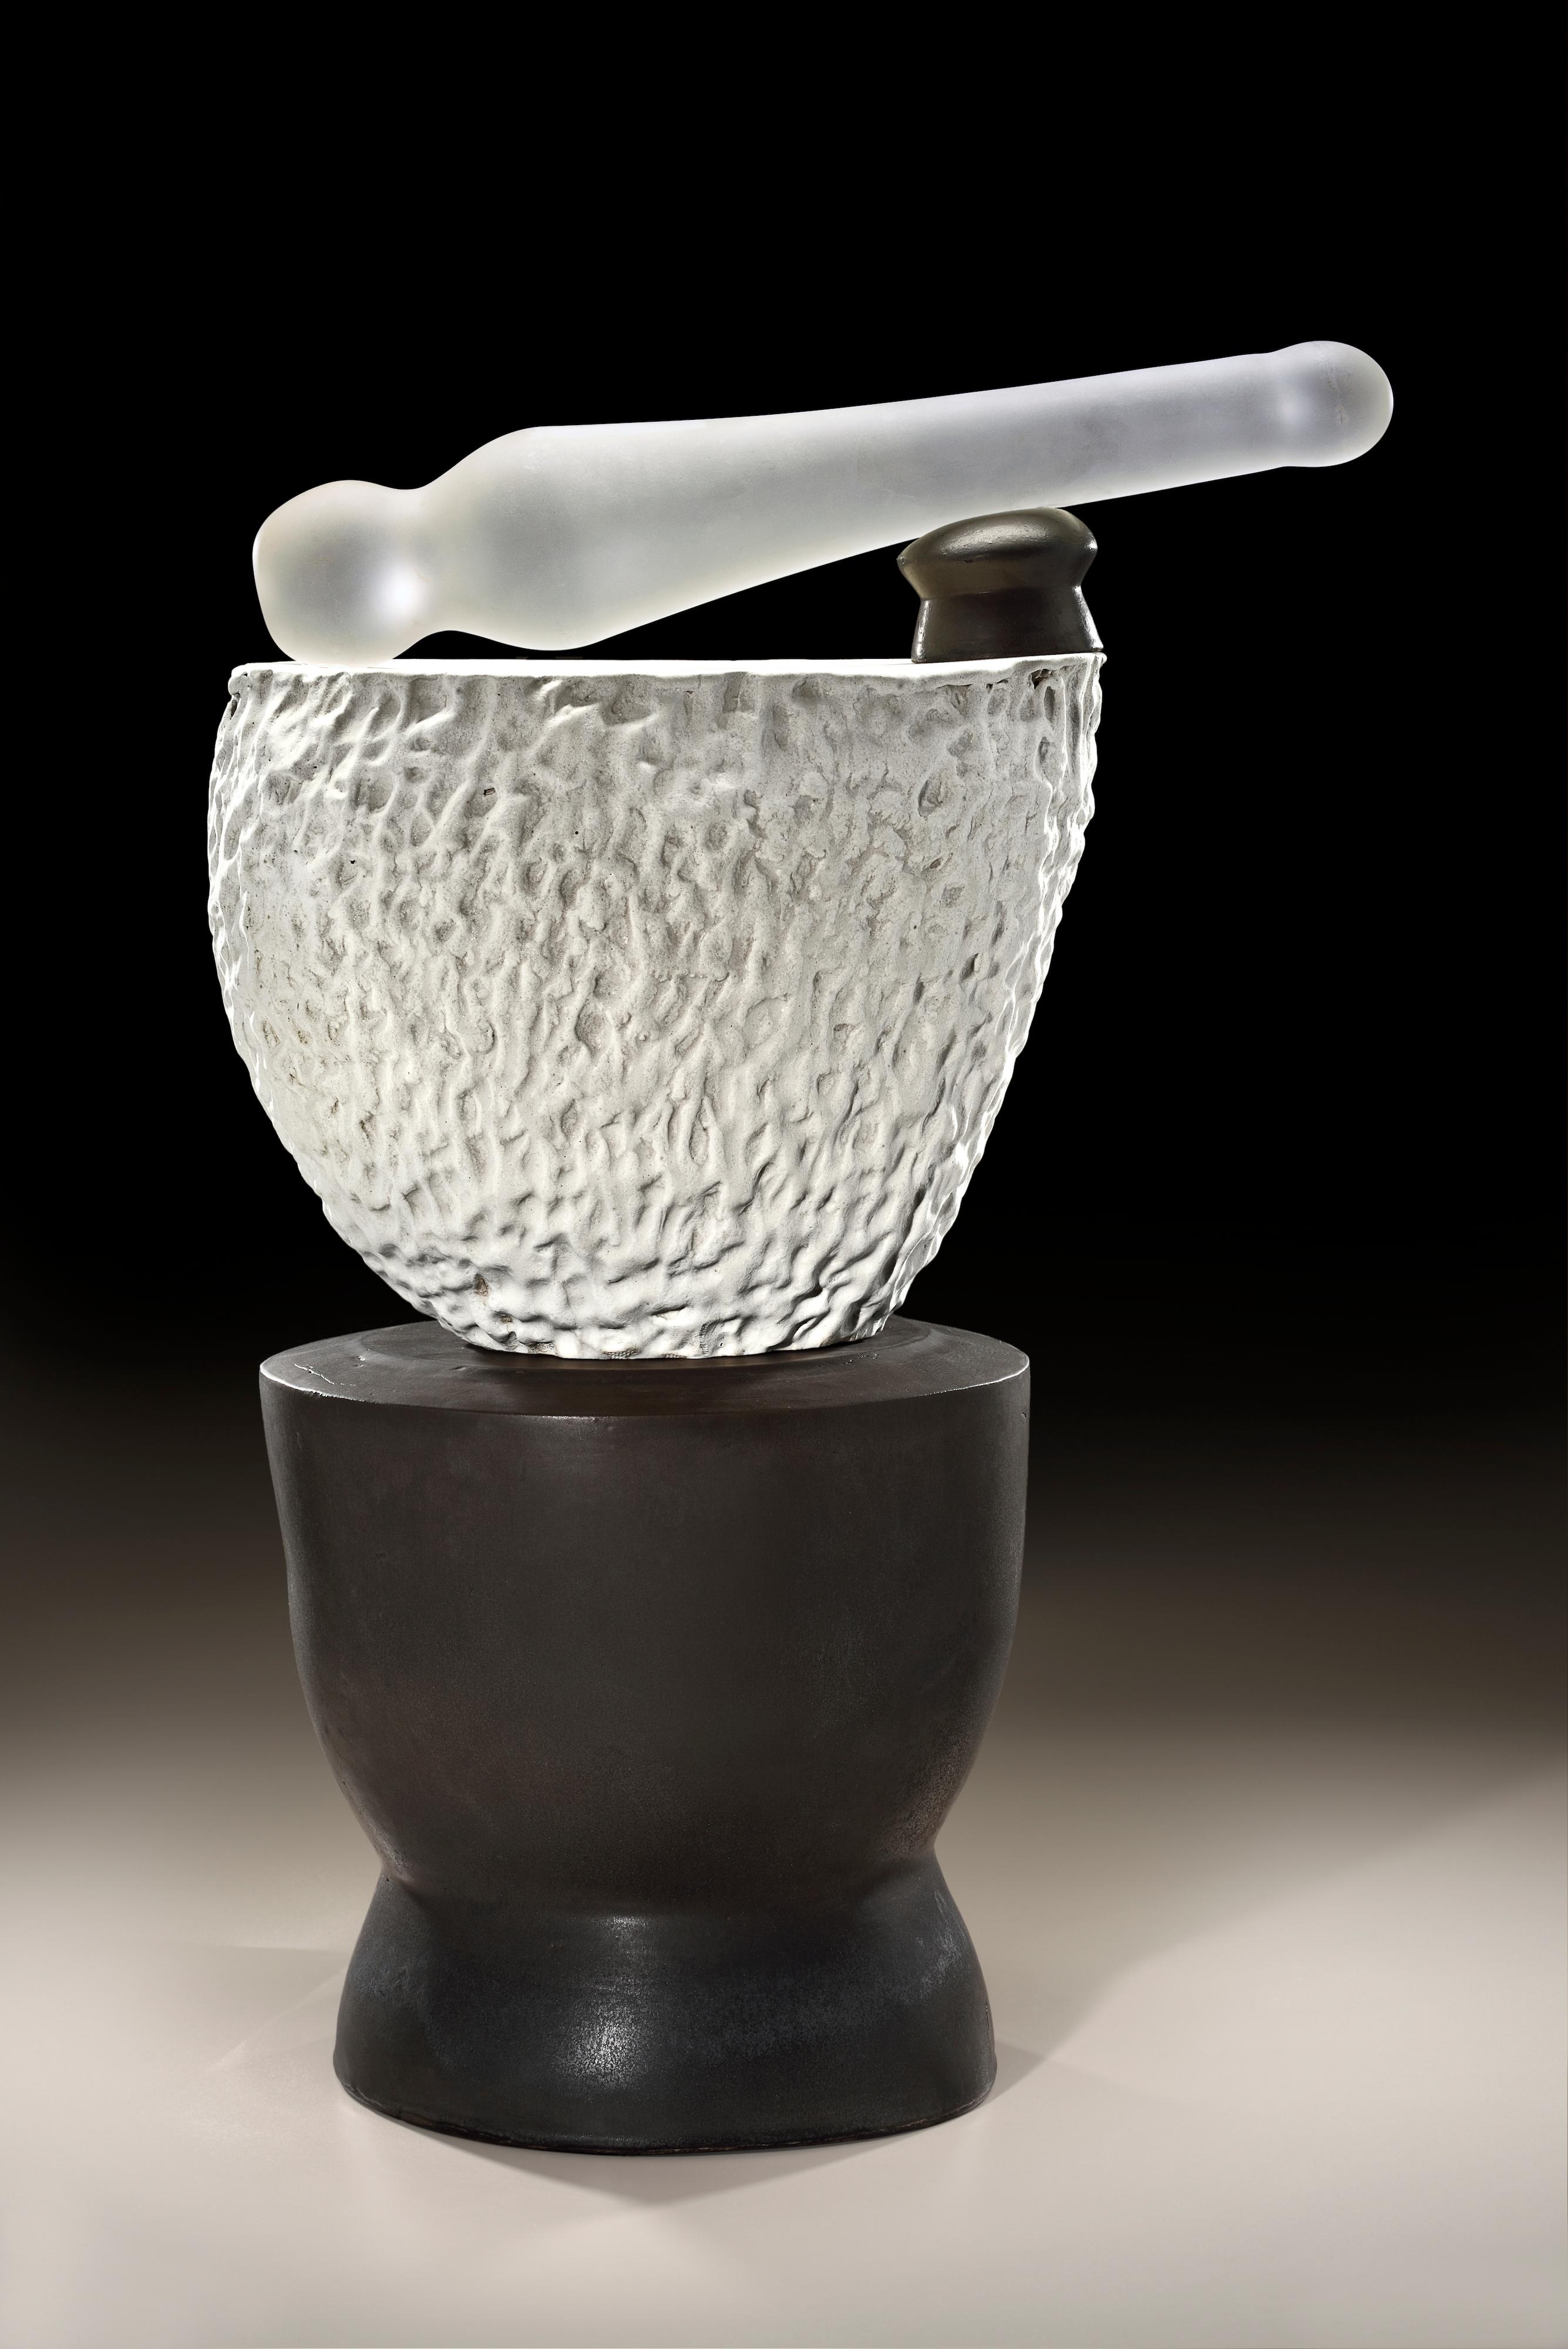 Contemporary Richard Hirsch Ceramic Mortar and Glass Pestle Sculpture #5, 2020 For Sale